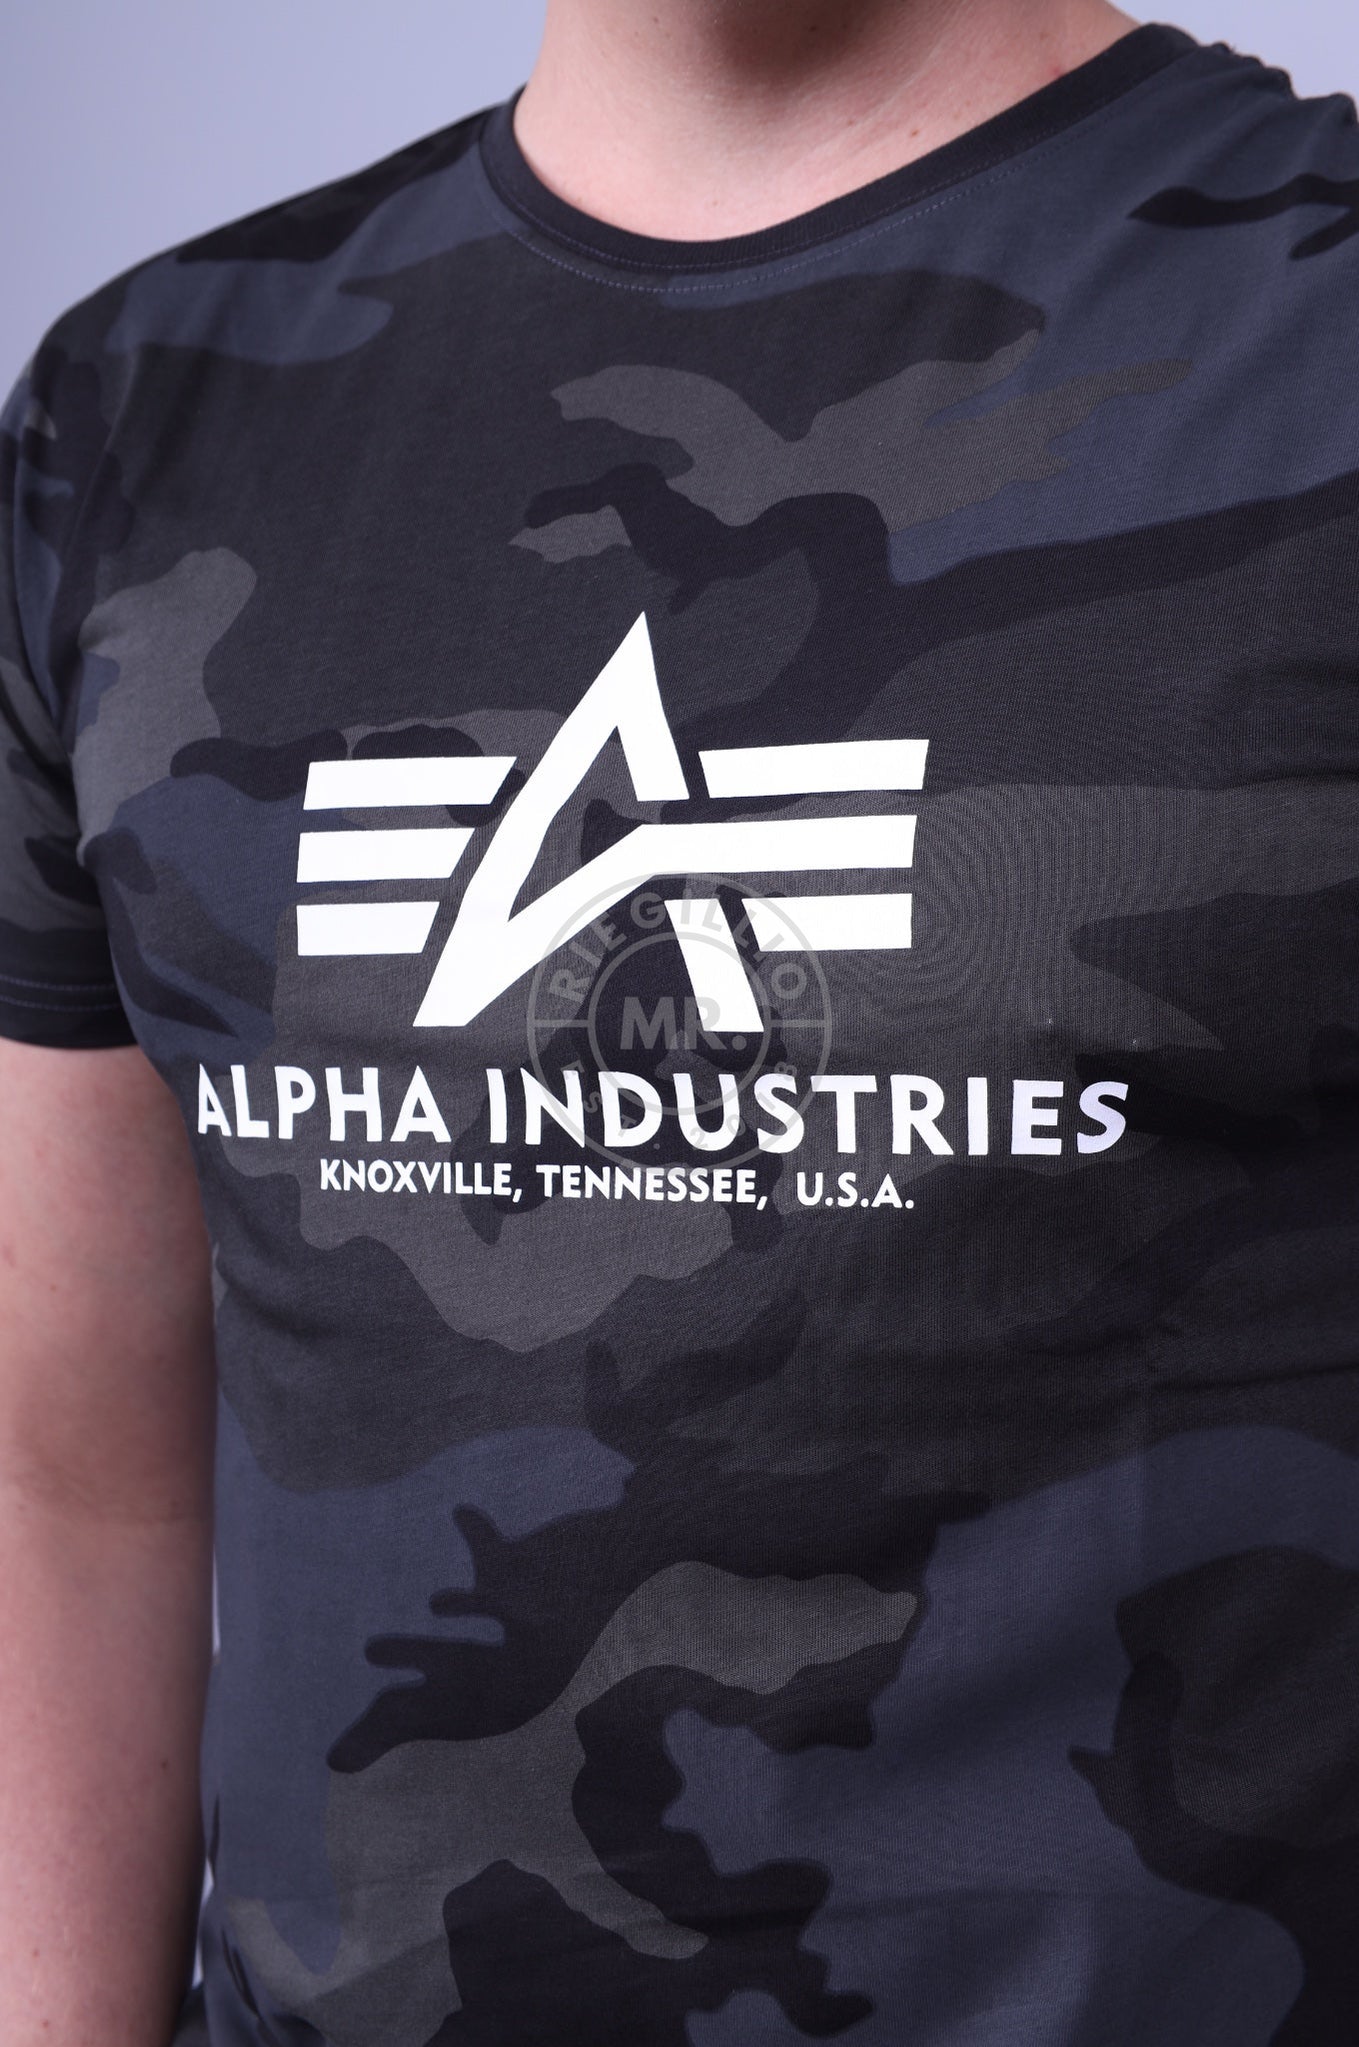 Alpha Industries Basic T-Shirt Black Camo at MR. Riegillio